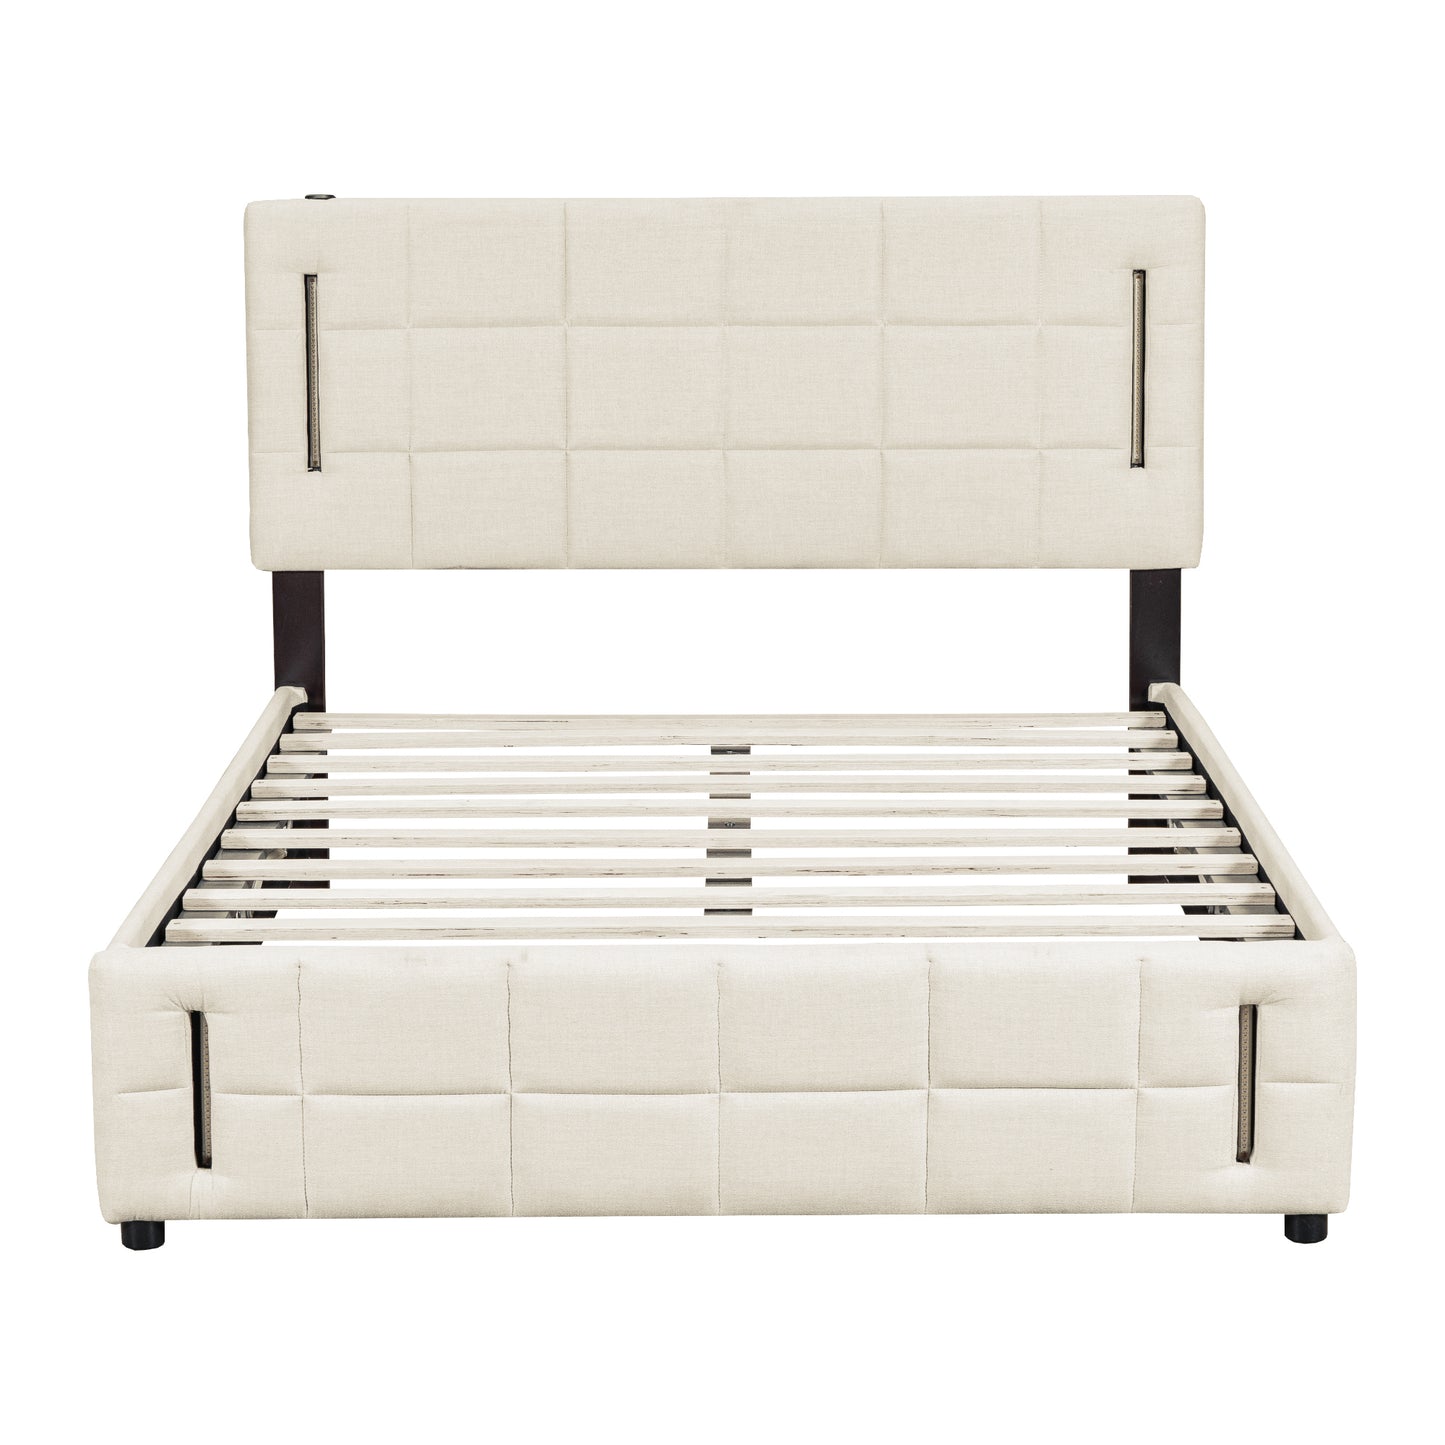 LED Full Size Upholstered Bed (beige)